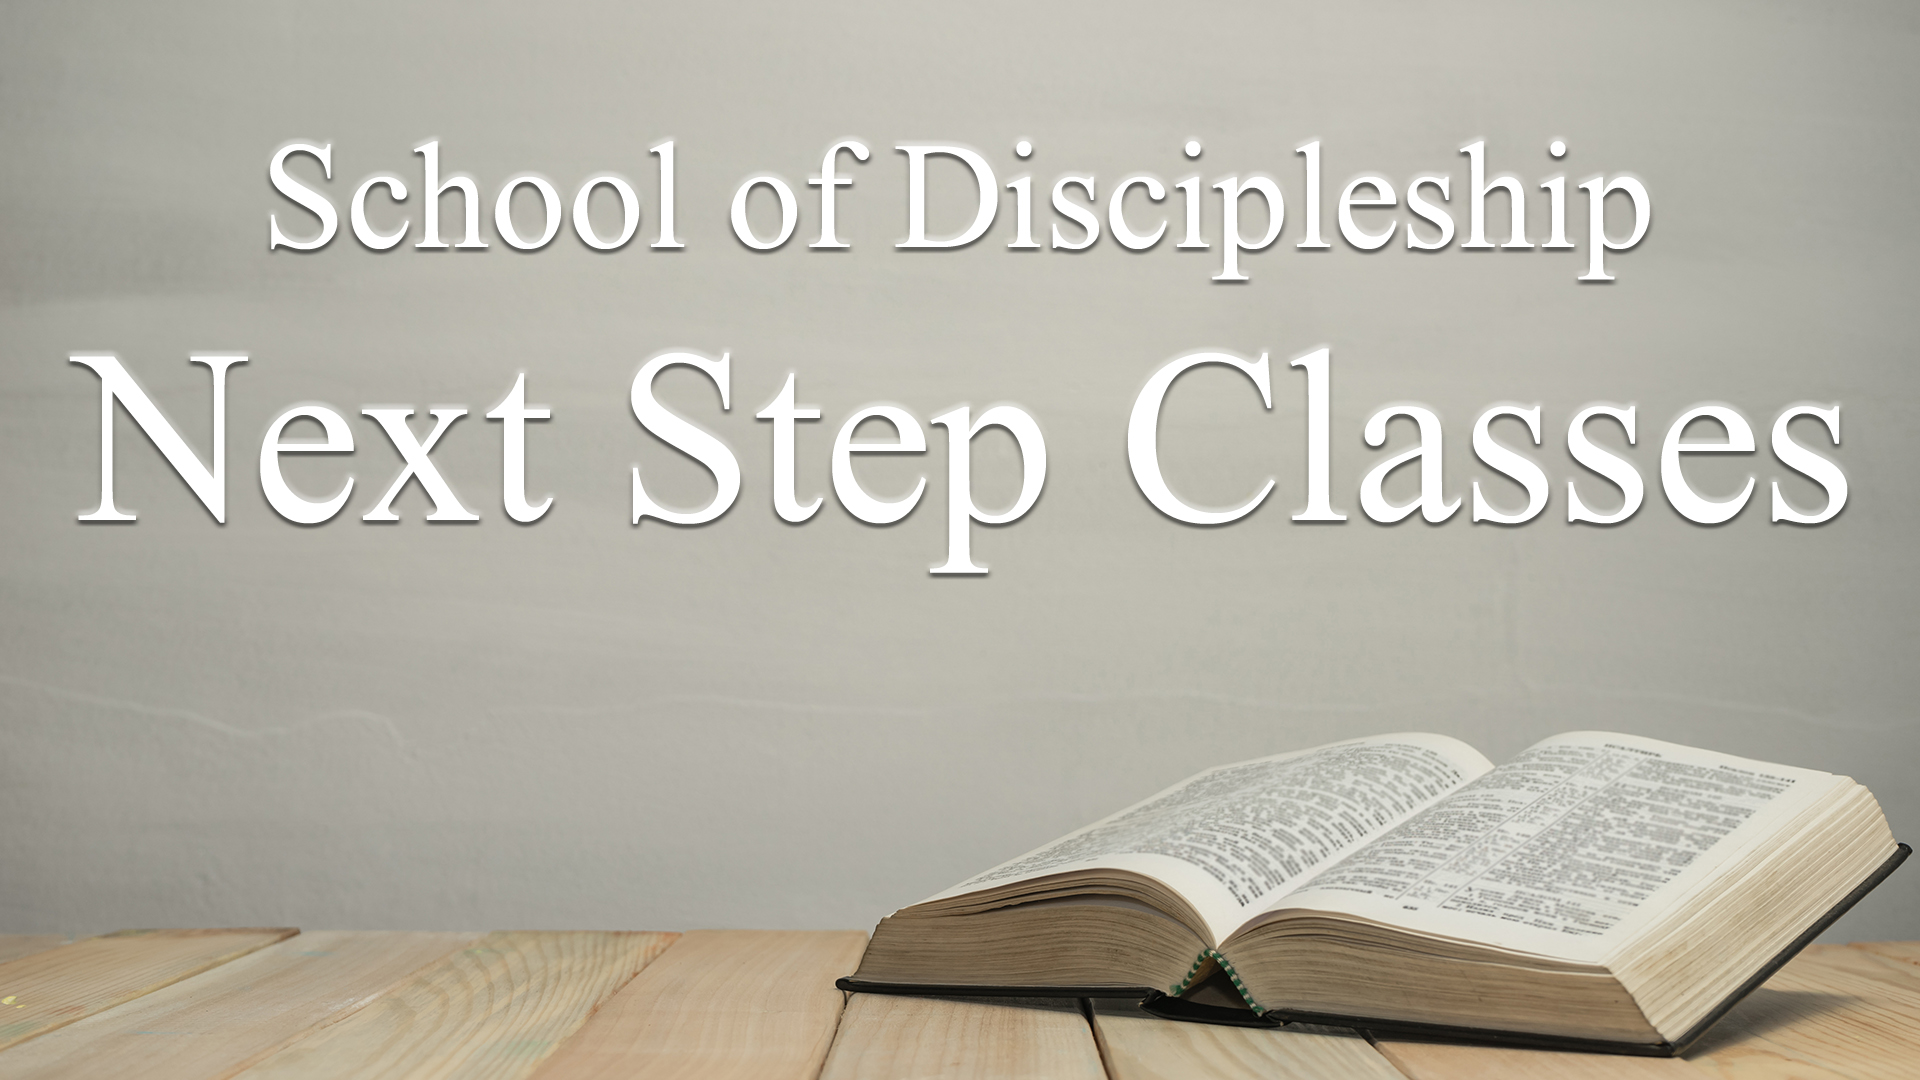 Firm Foundation Discipleship Program